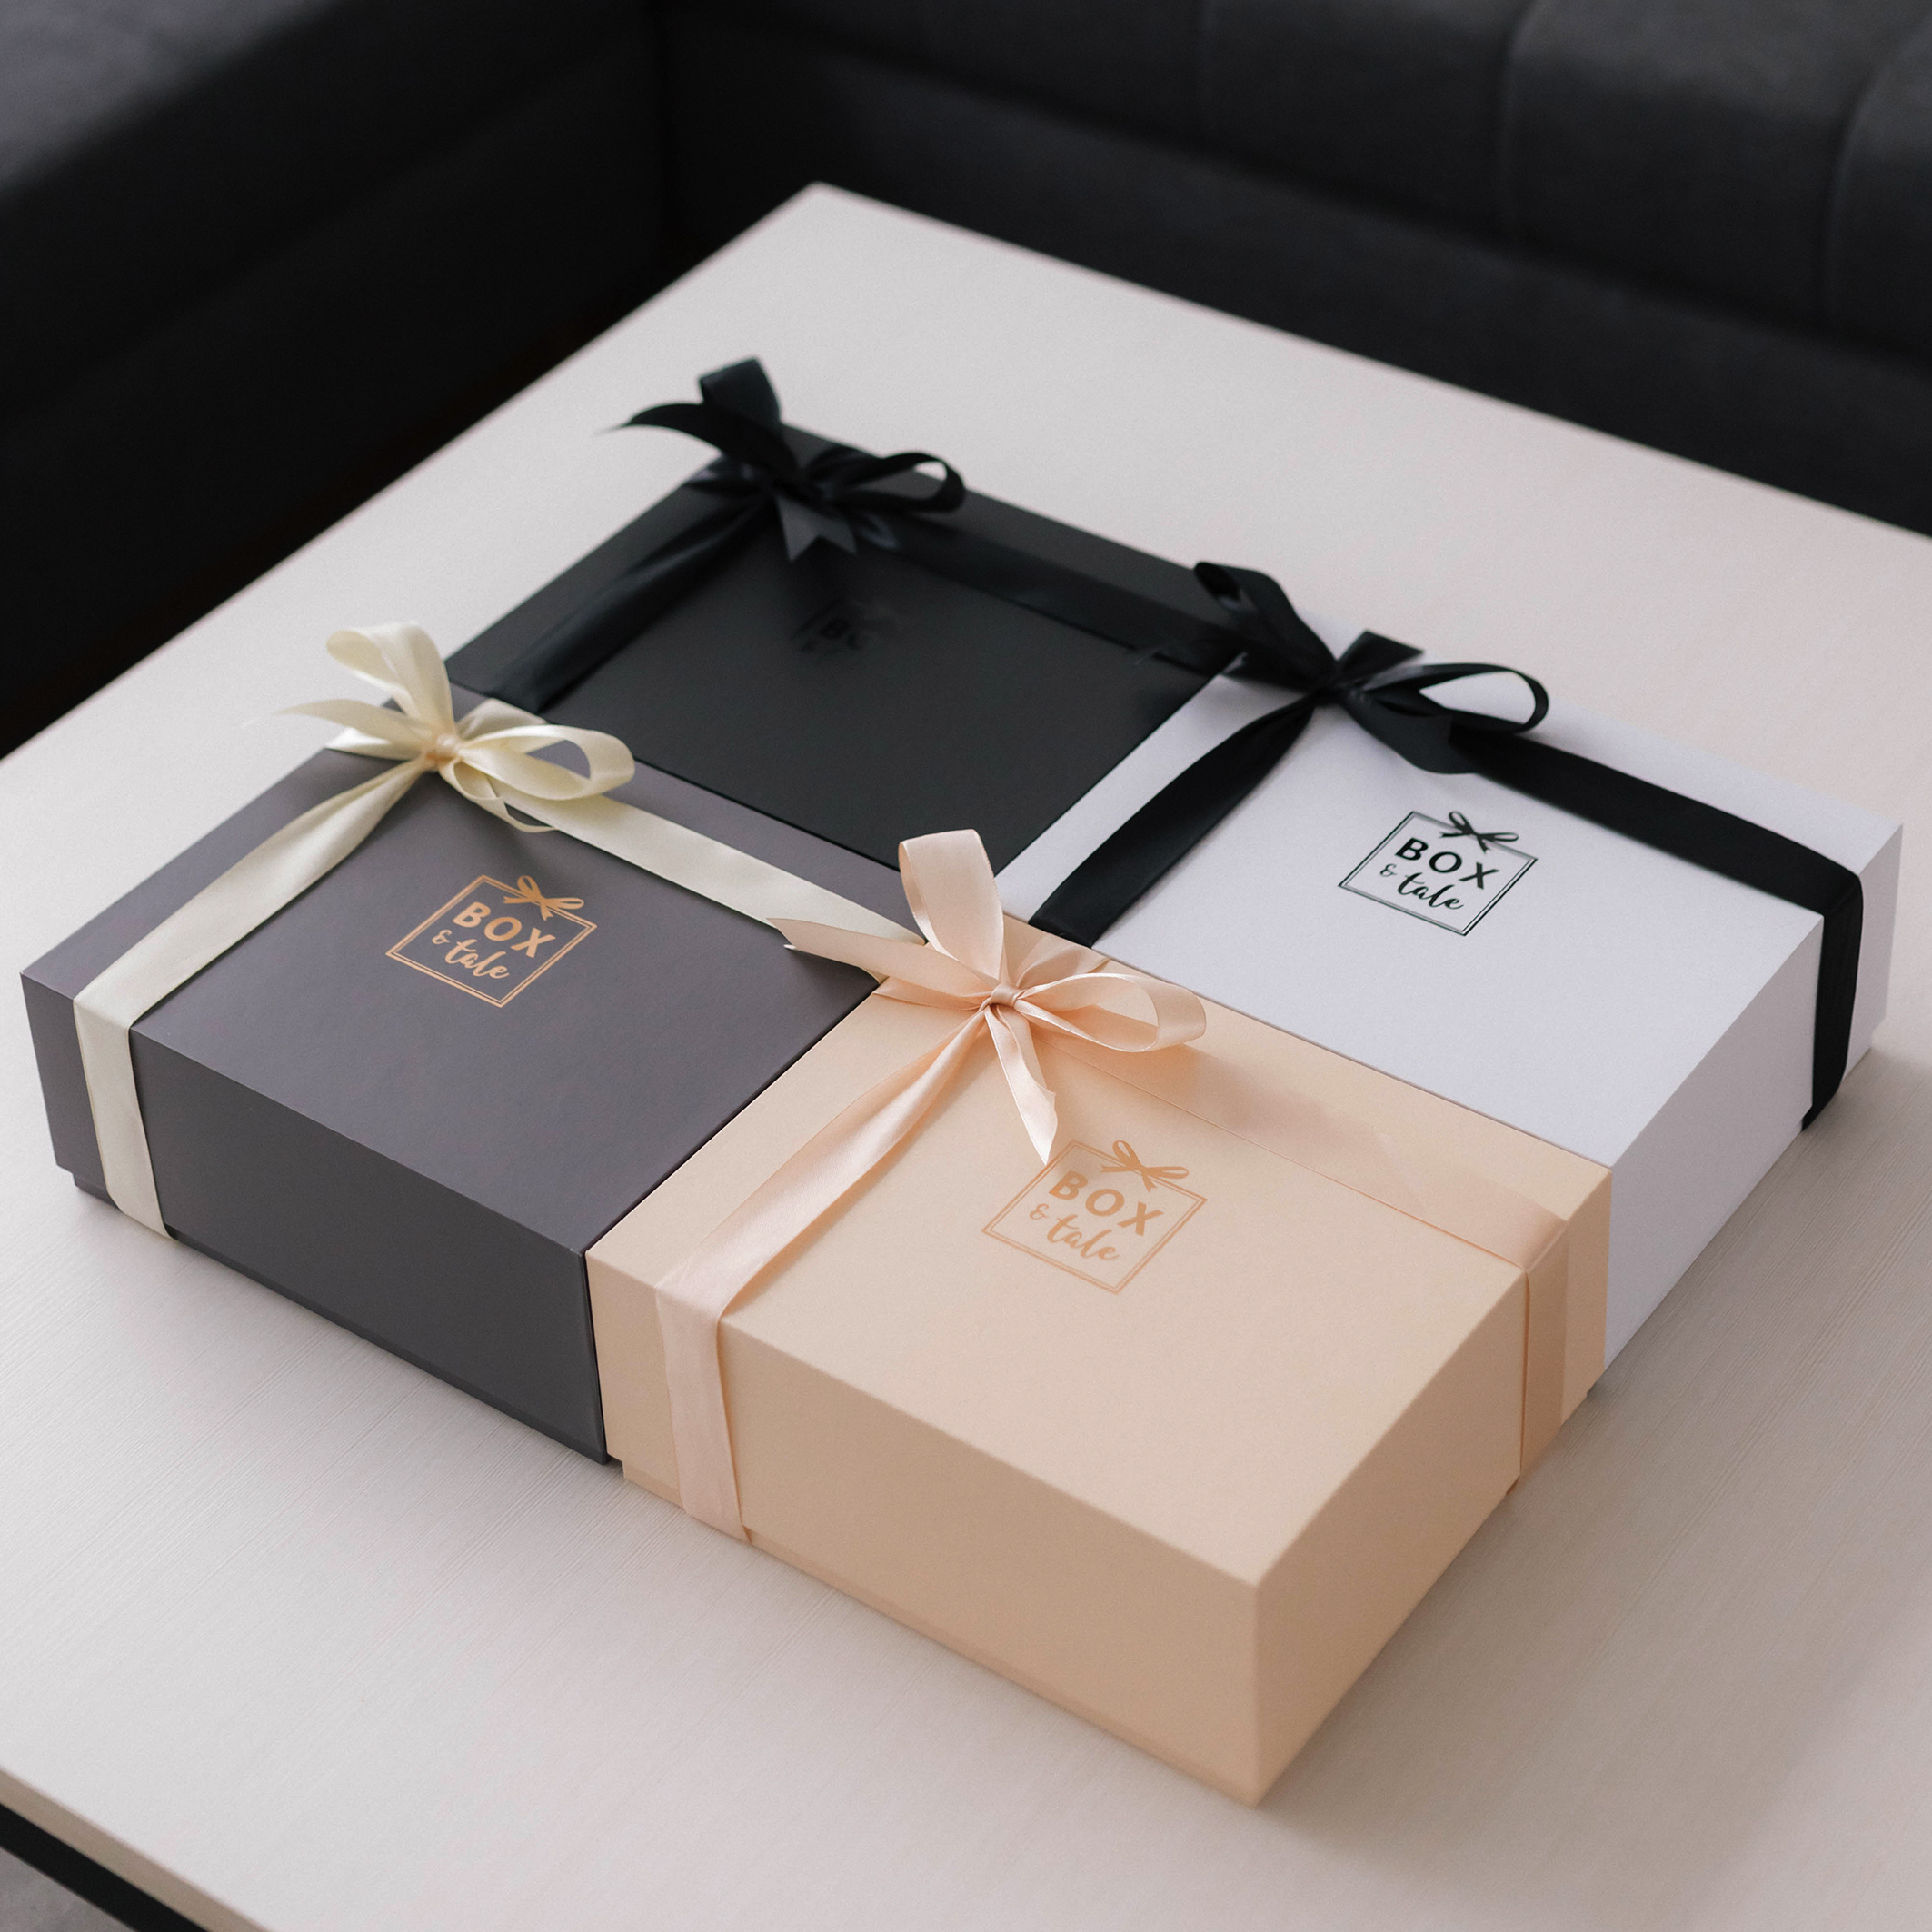 boxandtale-giftbox-hampers-kado-custom